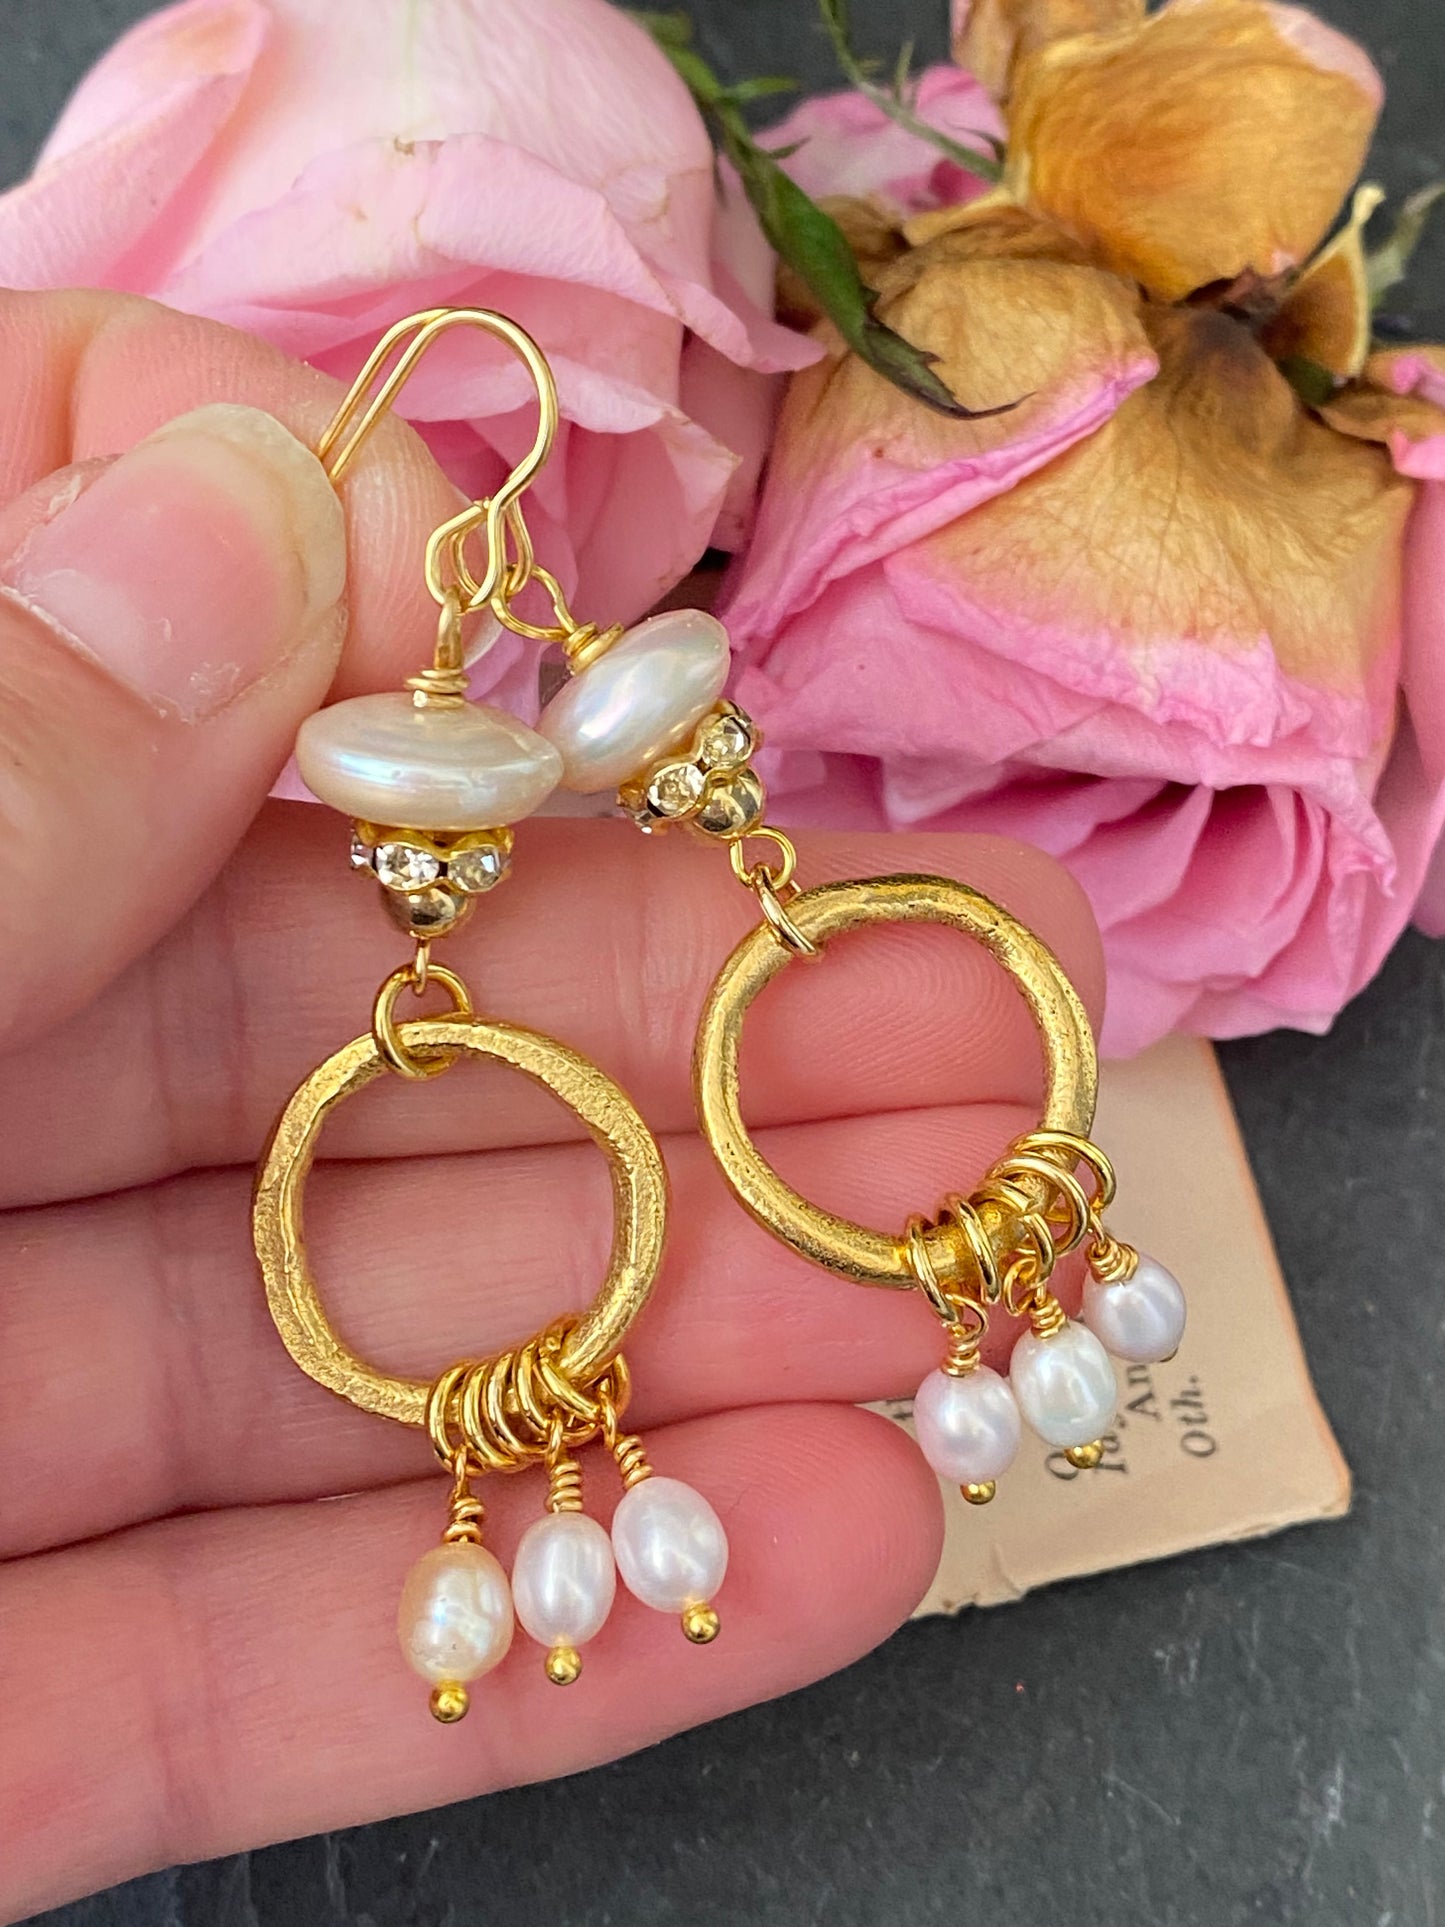 Pearls and gold metal, earrings.